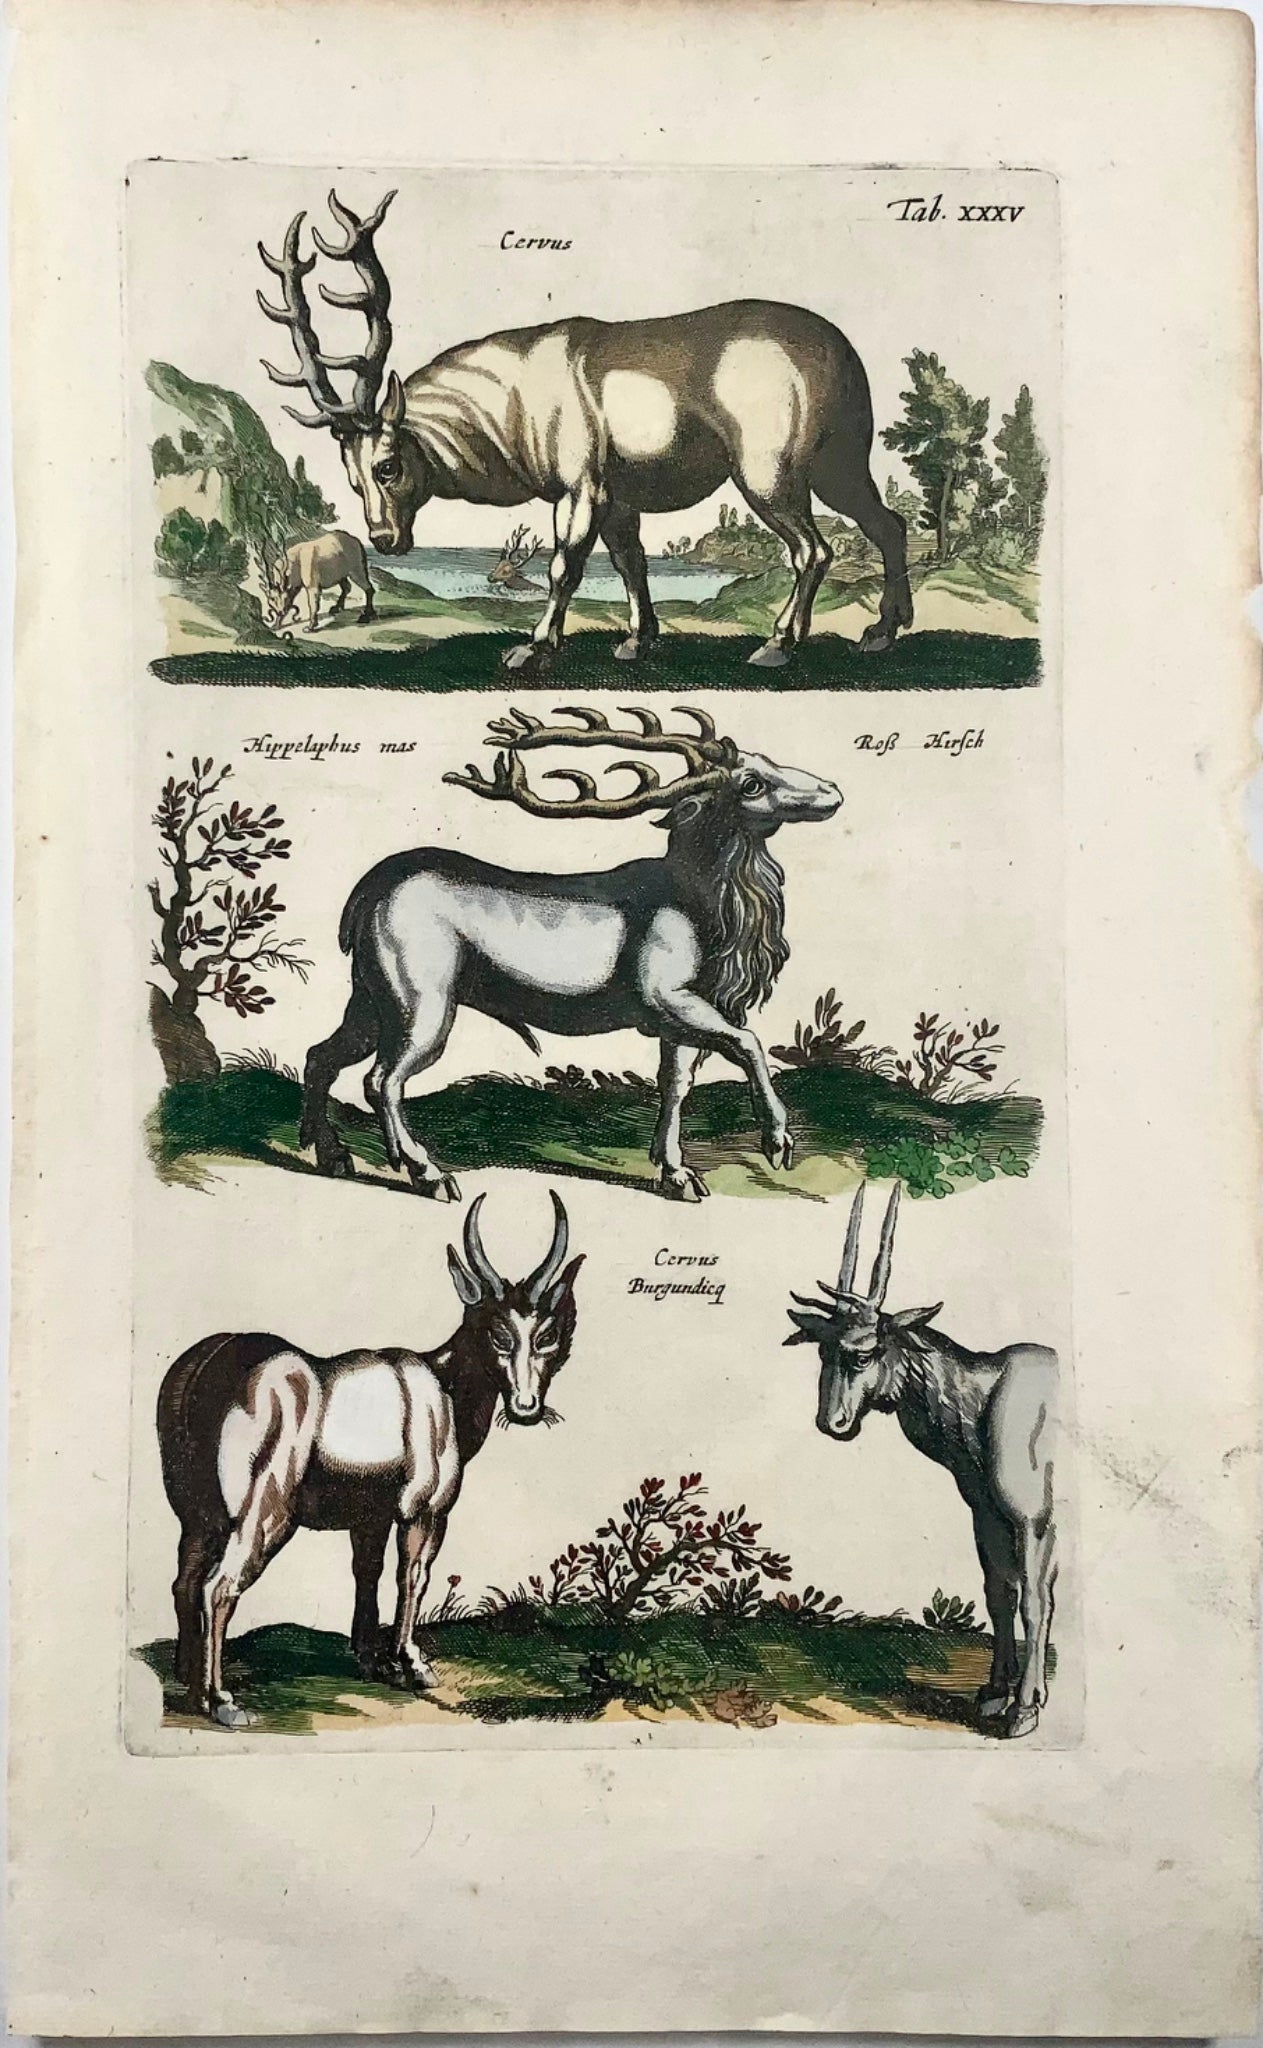 1657 Cervus, cerf Matt. Merian, in-folio, gravure coloriée à la main, mammifères